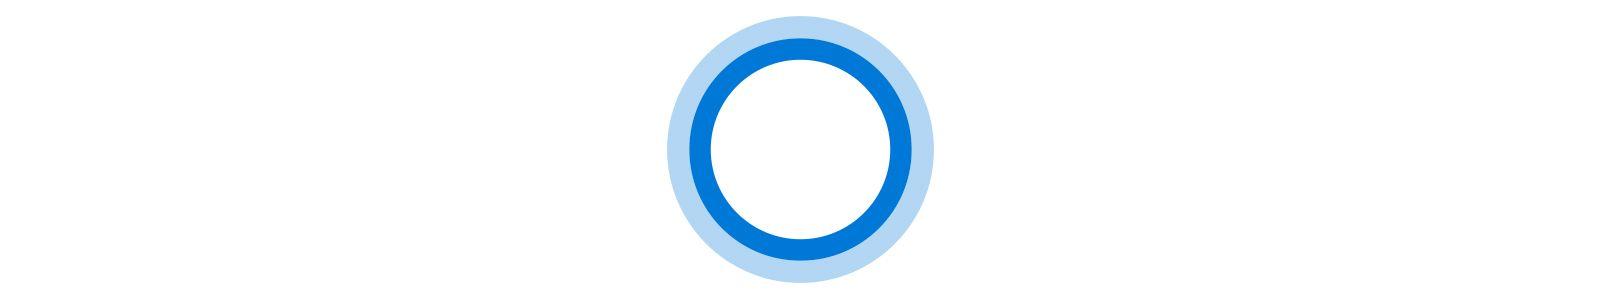 Microsoft Cortana Logo - Cortana | Your Intelligent Virtual & Personal Assistant | Microsoft